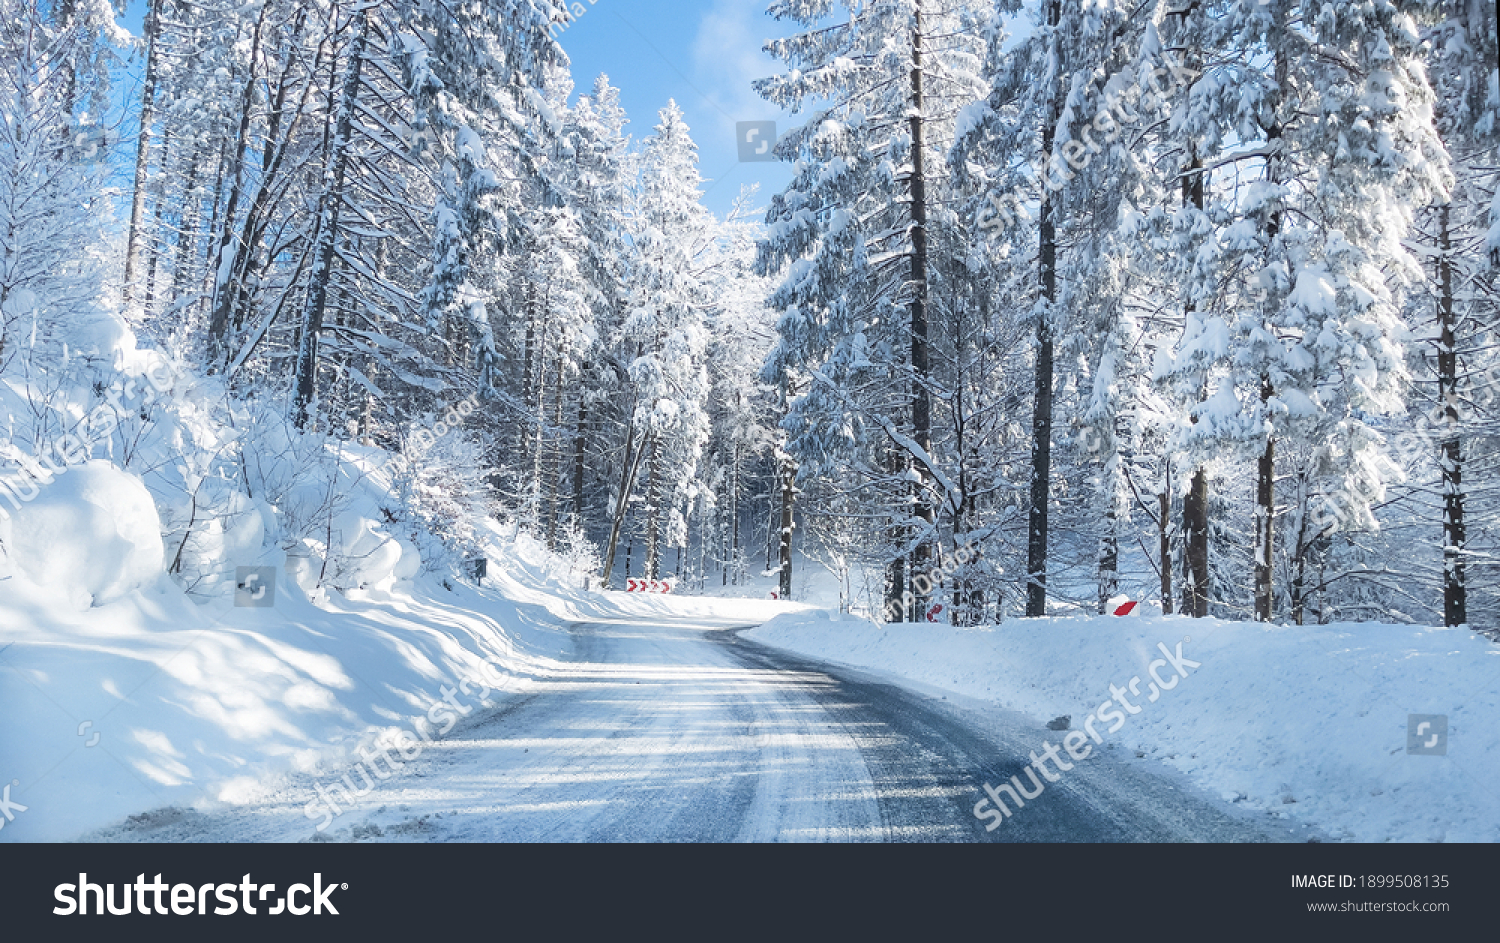 Snowy winter road in a mountain forest. Beautiful winter landscape. #1899508135